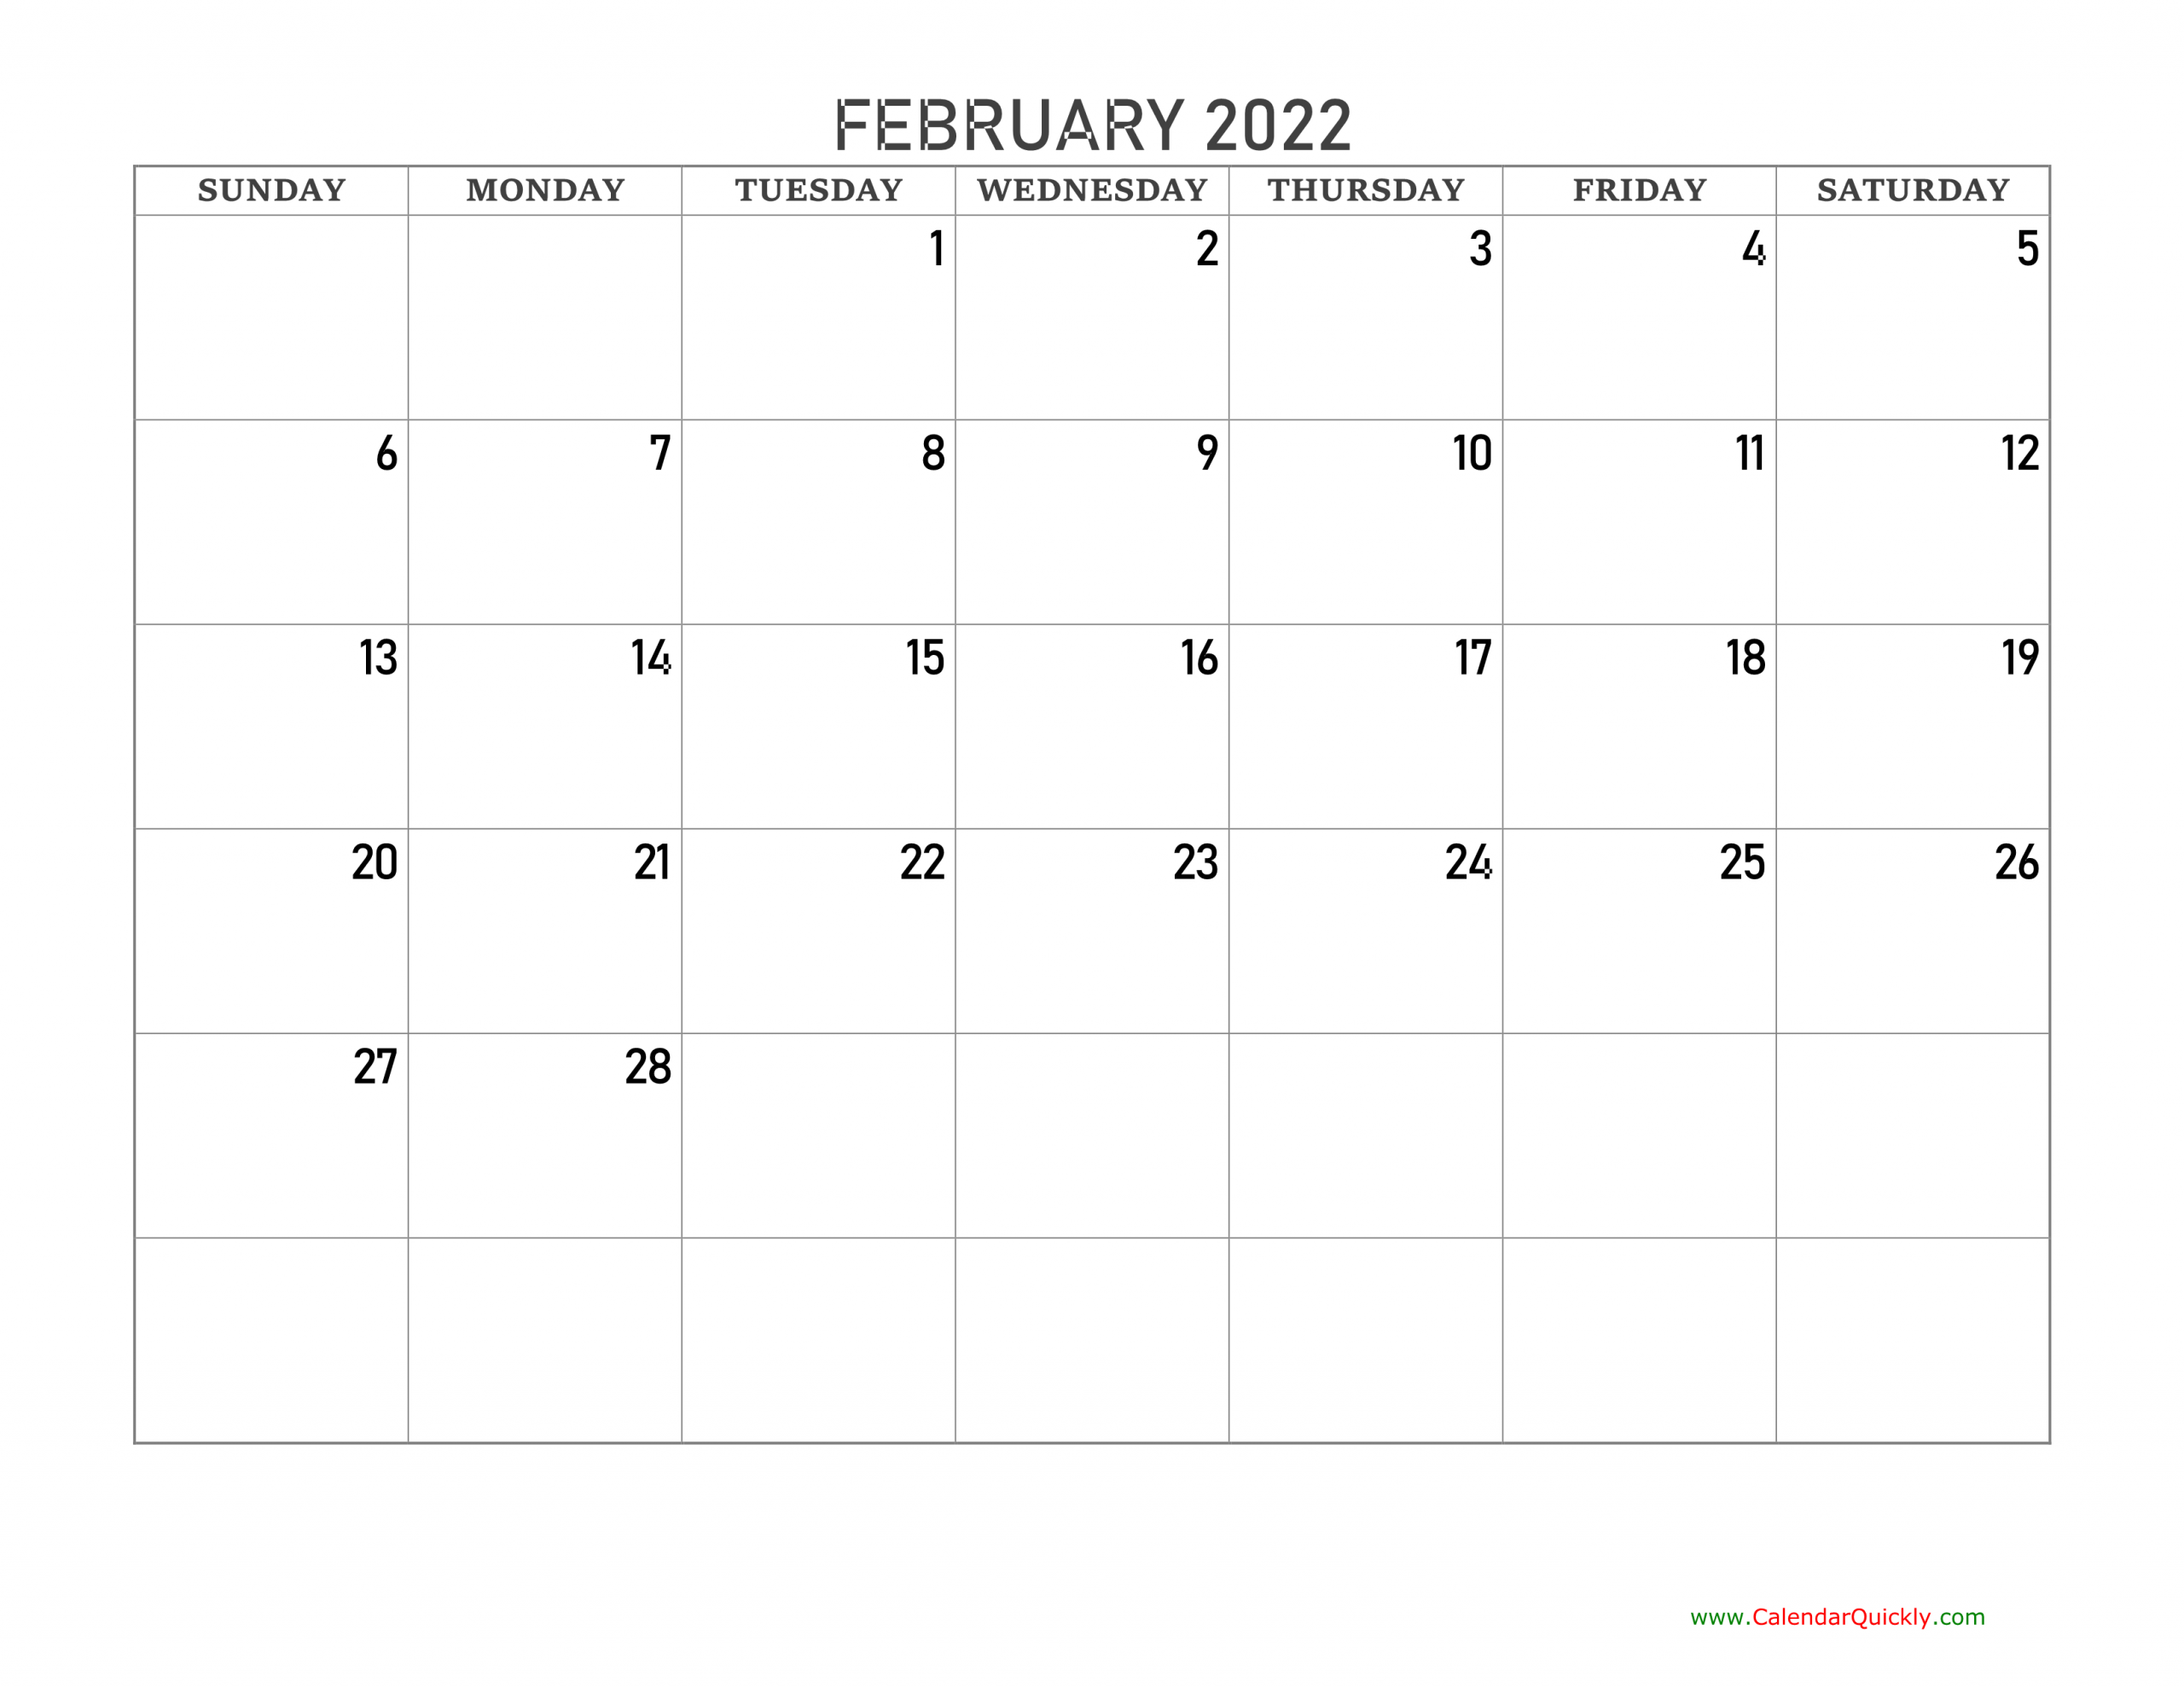 February 2022 Blank Calendar Calendar Quickly